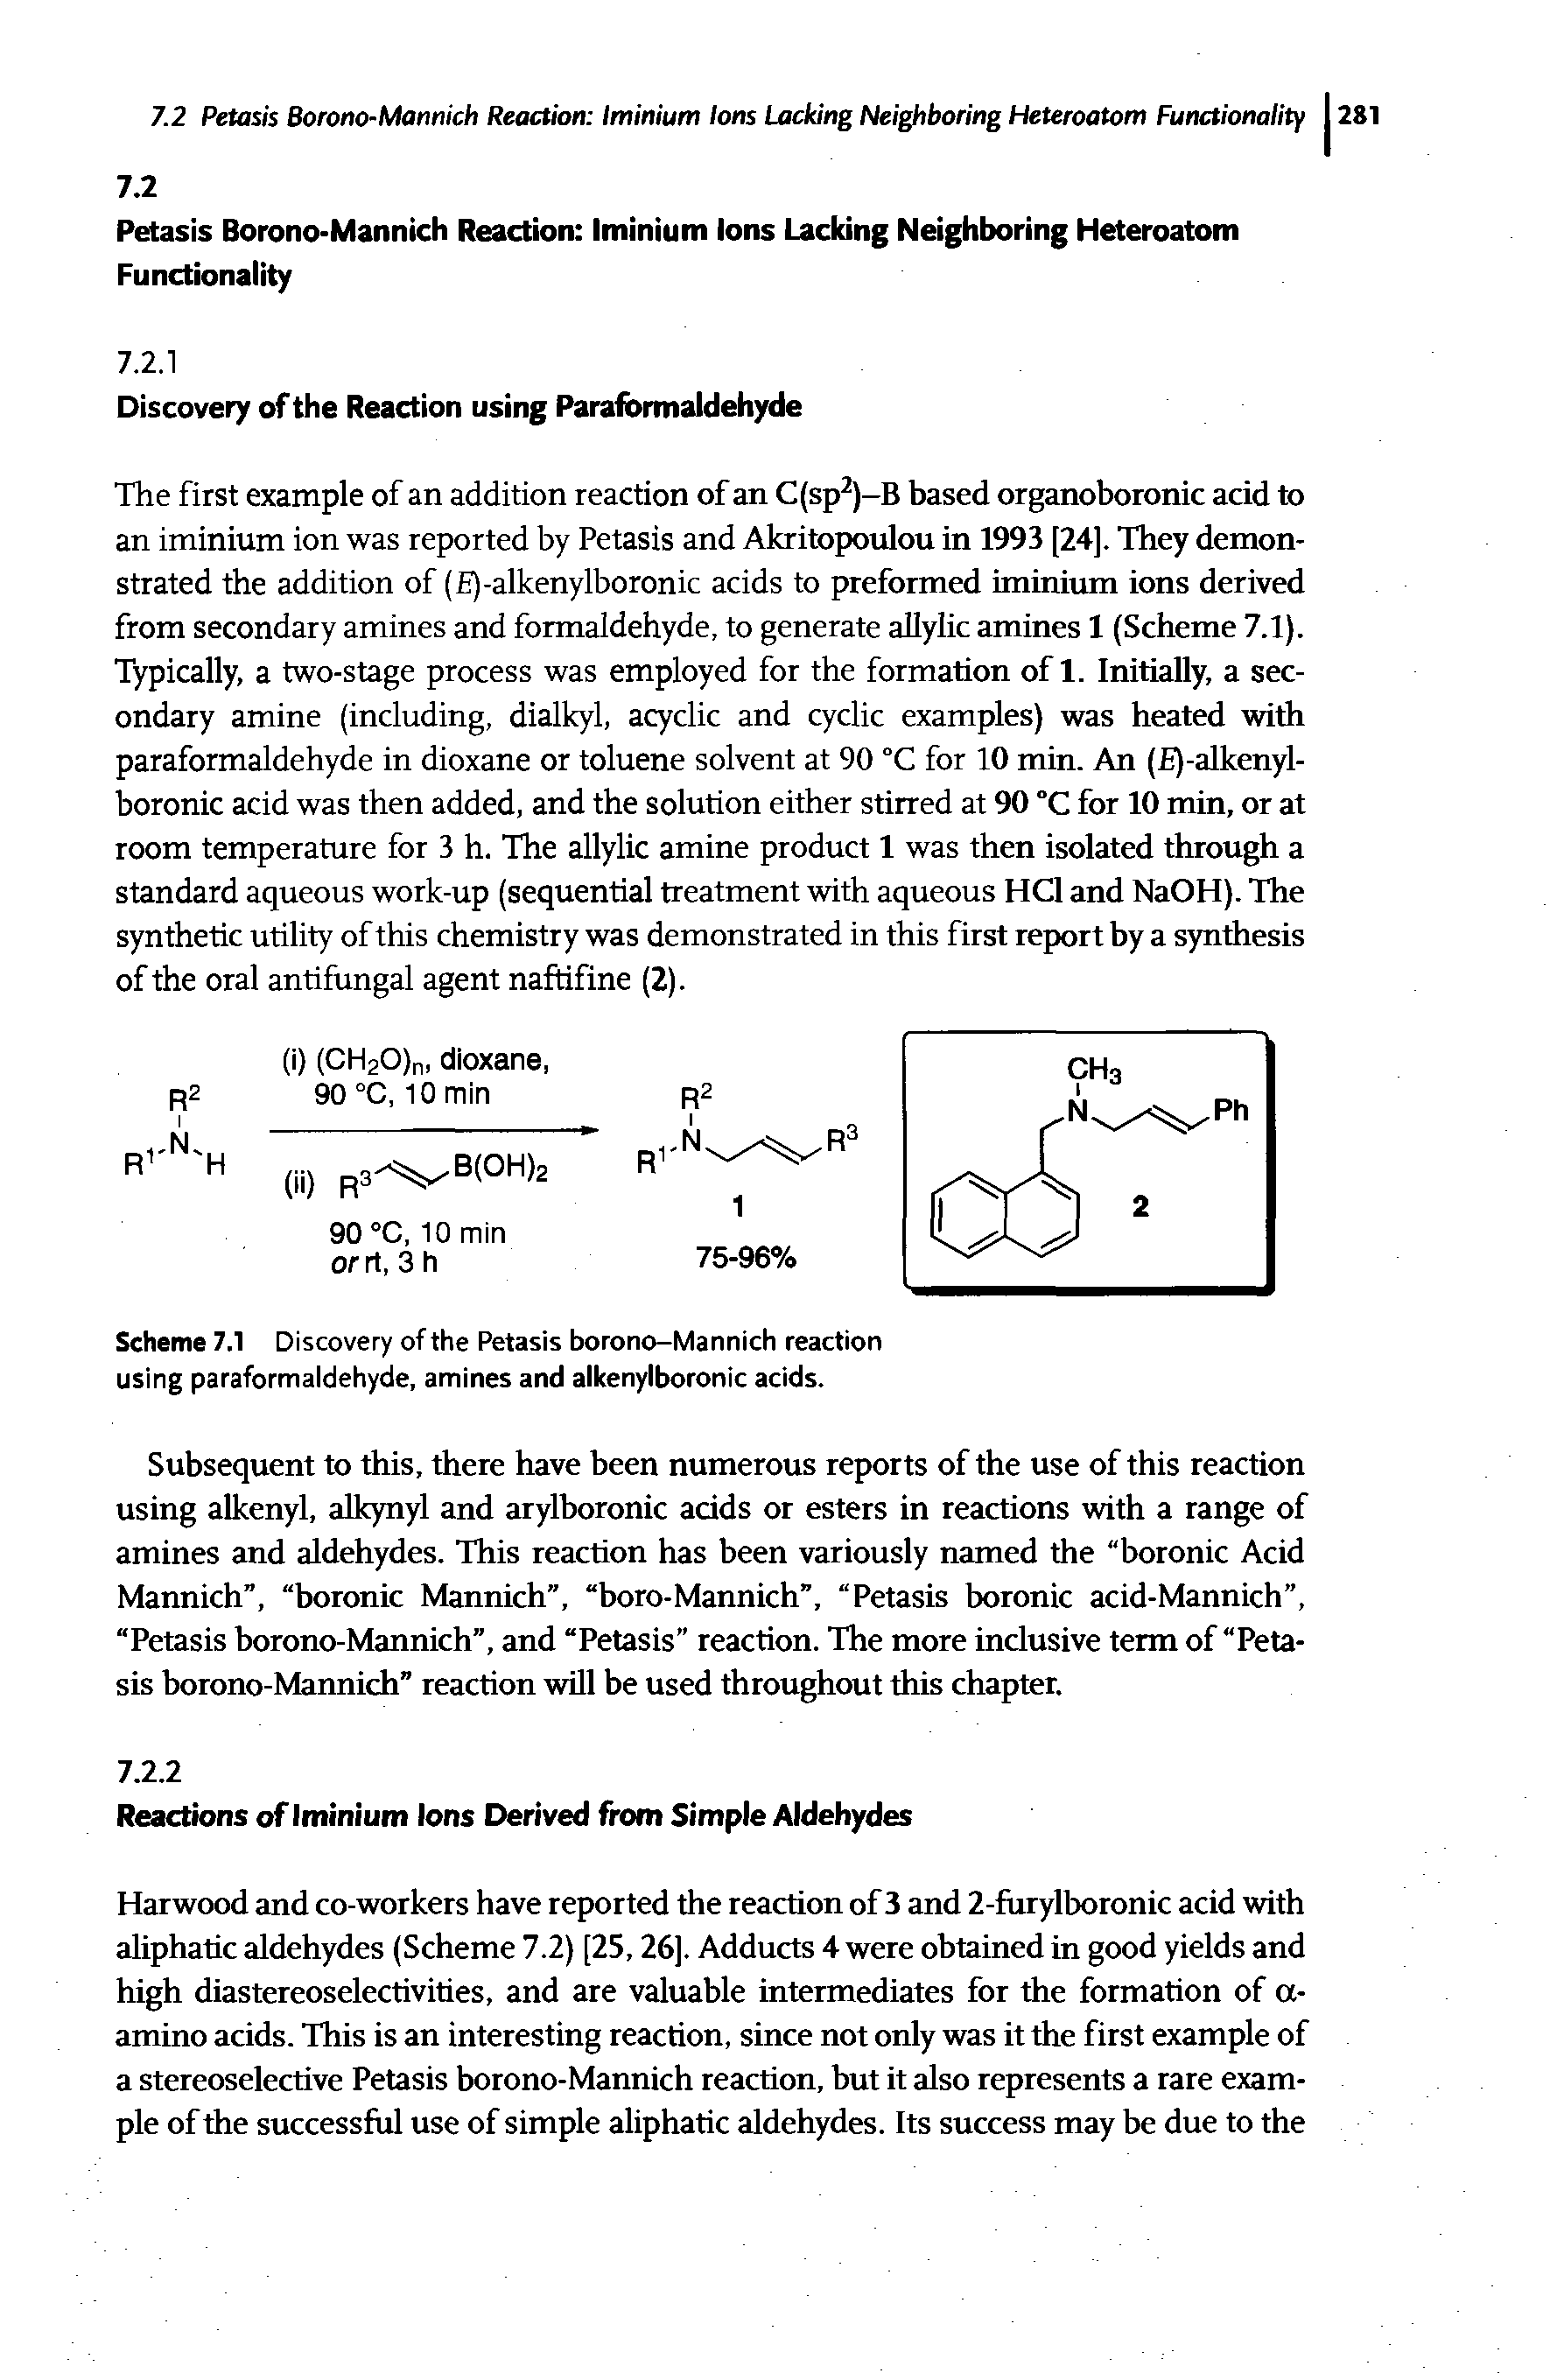 Scheme 7.1 Discovery of the Petasis borono-Mannich reaction using paraformaldehyde, amines and alkenylboronic acids.